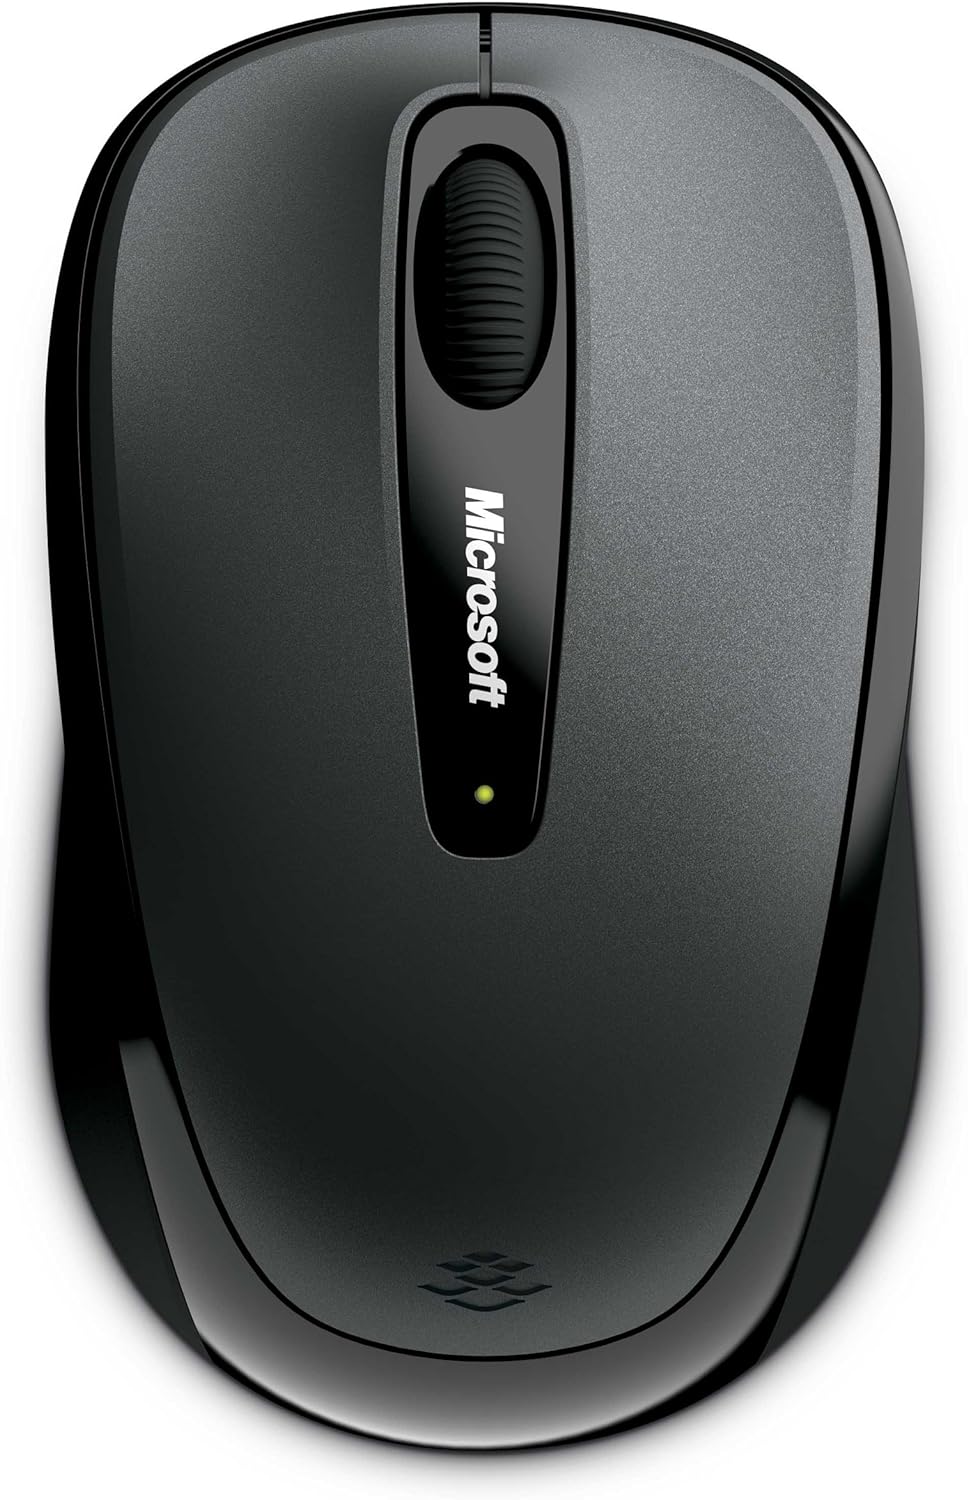 Microsoft Wireless Mobile 3500 Ambidextrous USB 2.0 Mouse - Loch Ness Grey (Certified Refurbished)